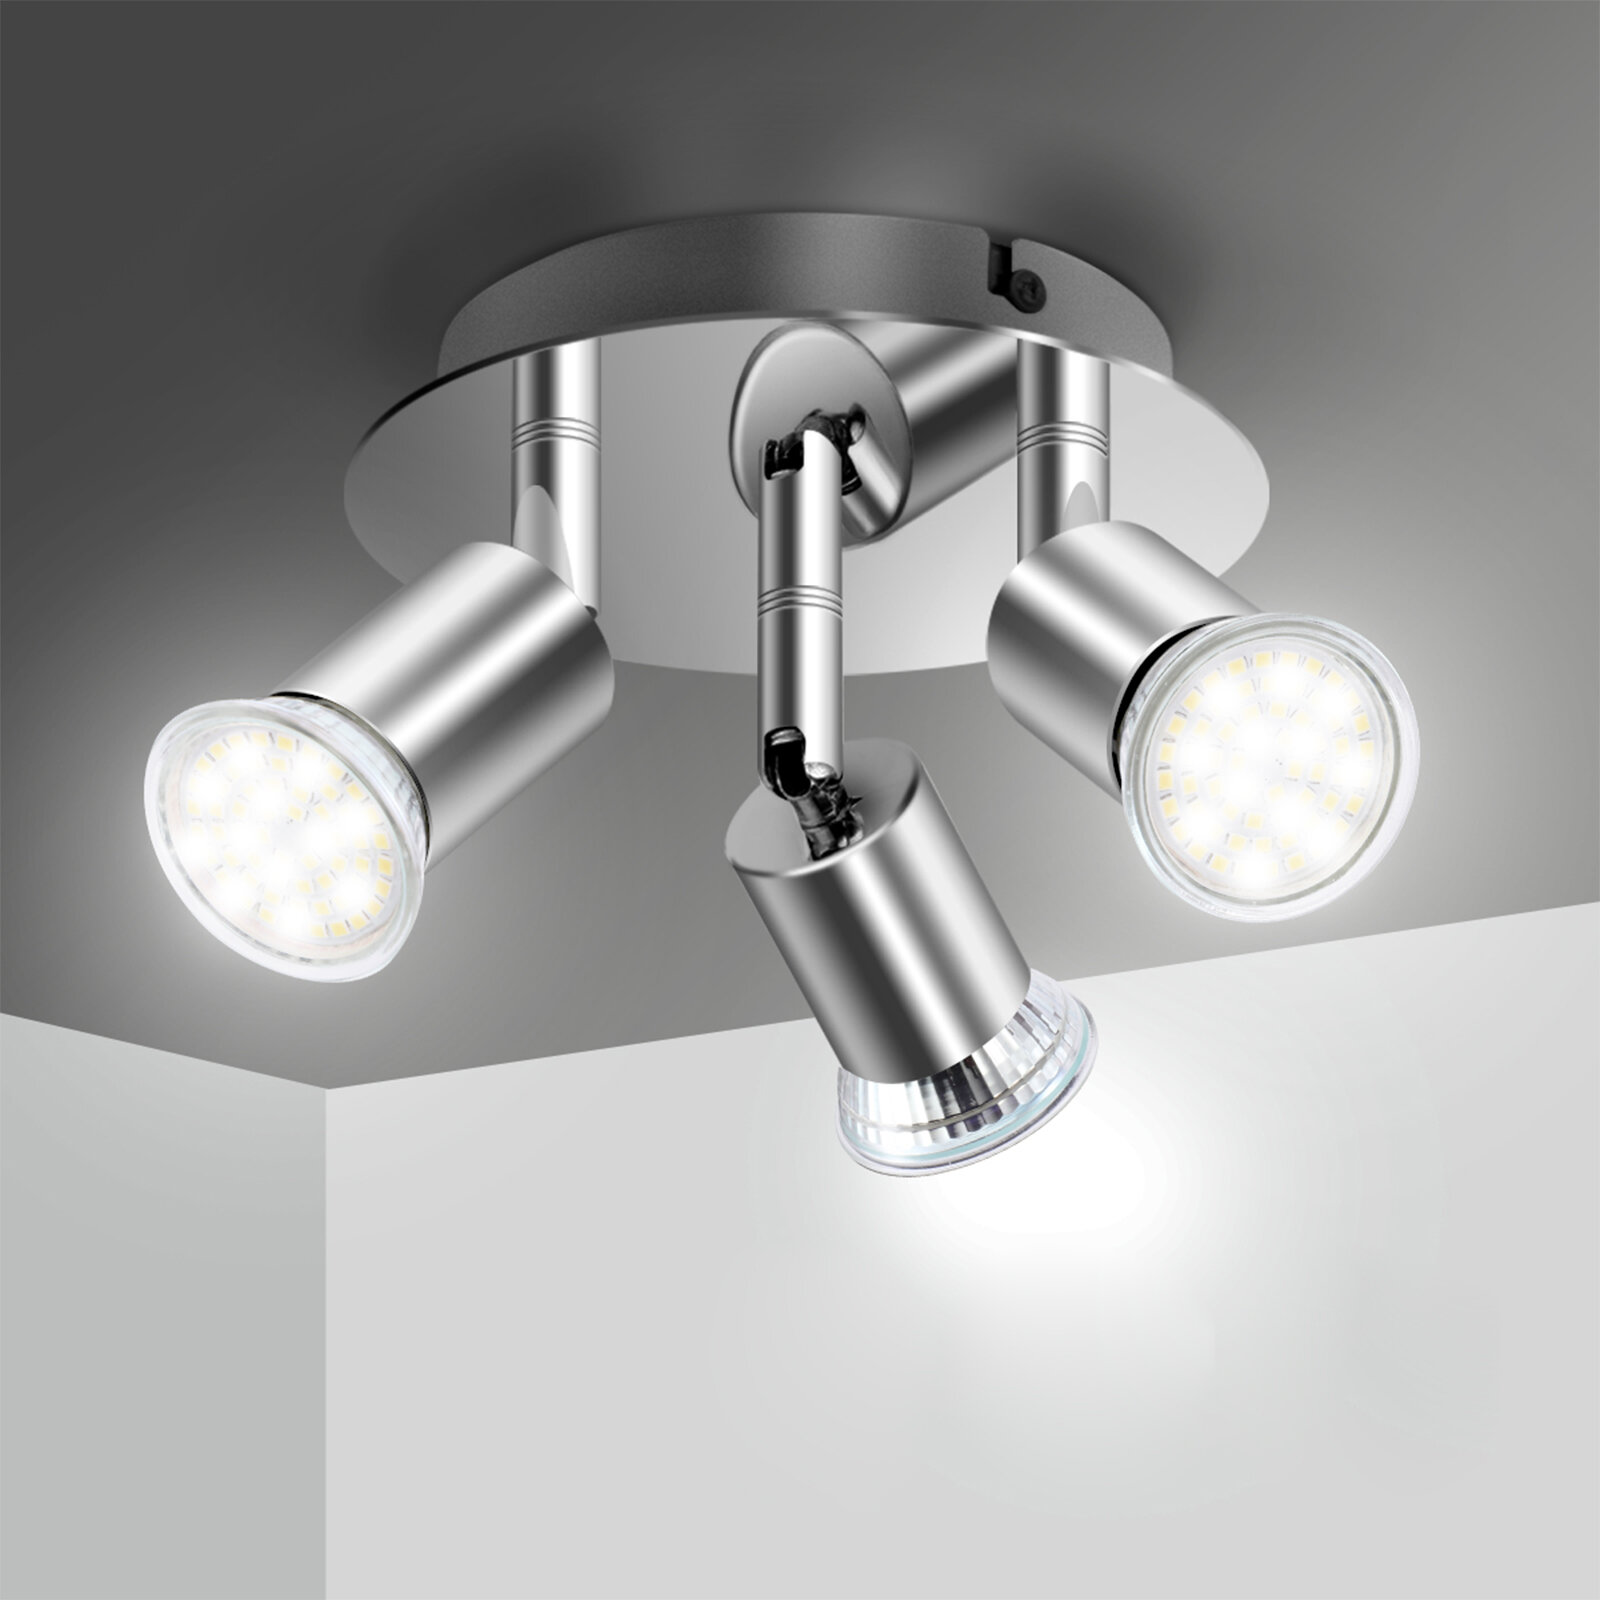 Elfeland 100-220V 3 Way GU10 LED Draaibare Plafondlamp Lamp Spotlight Fitting Home Verlichting